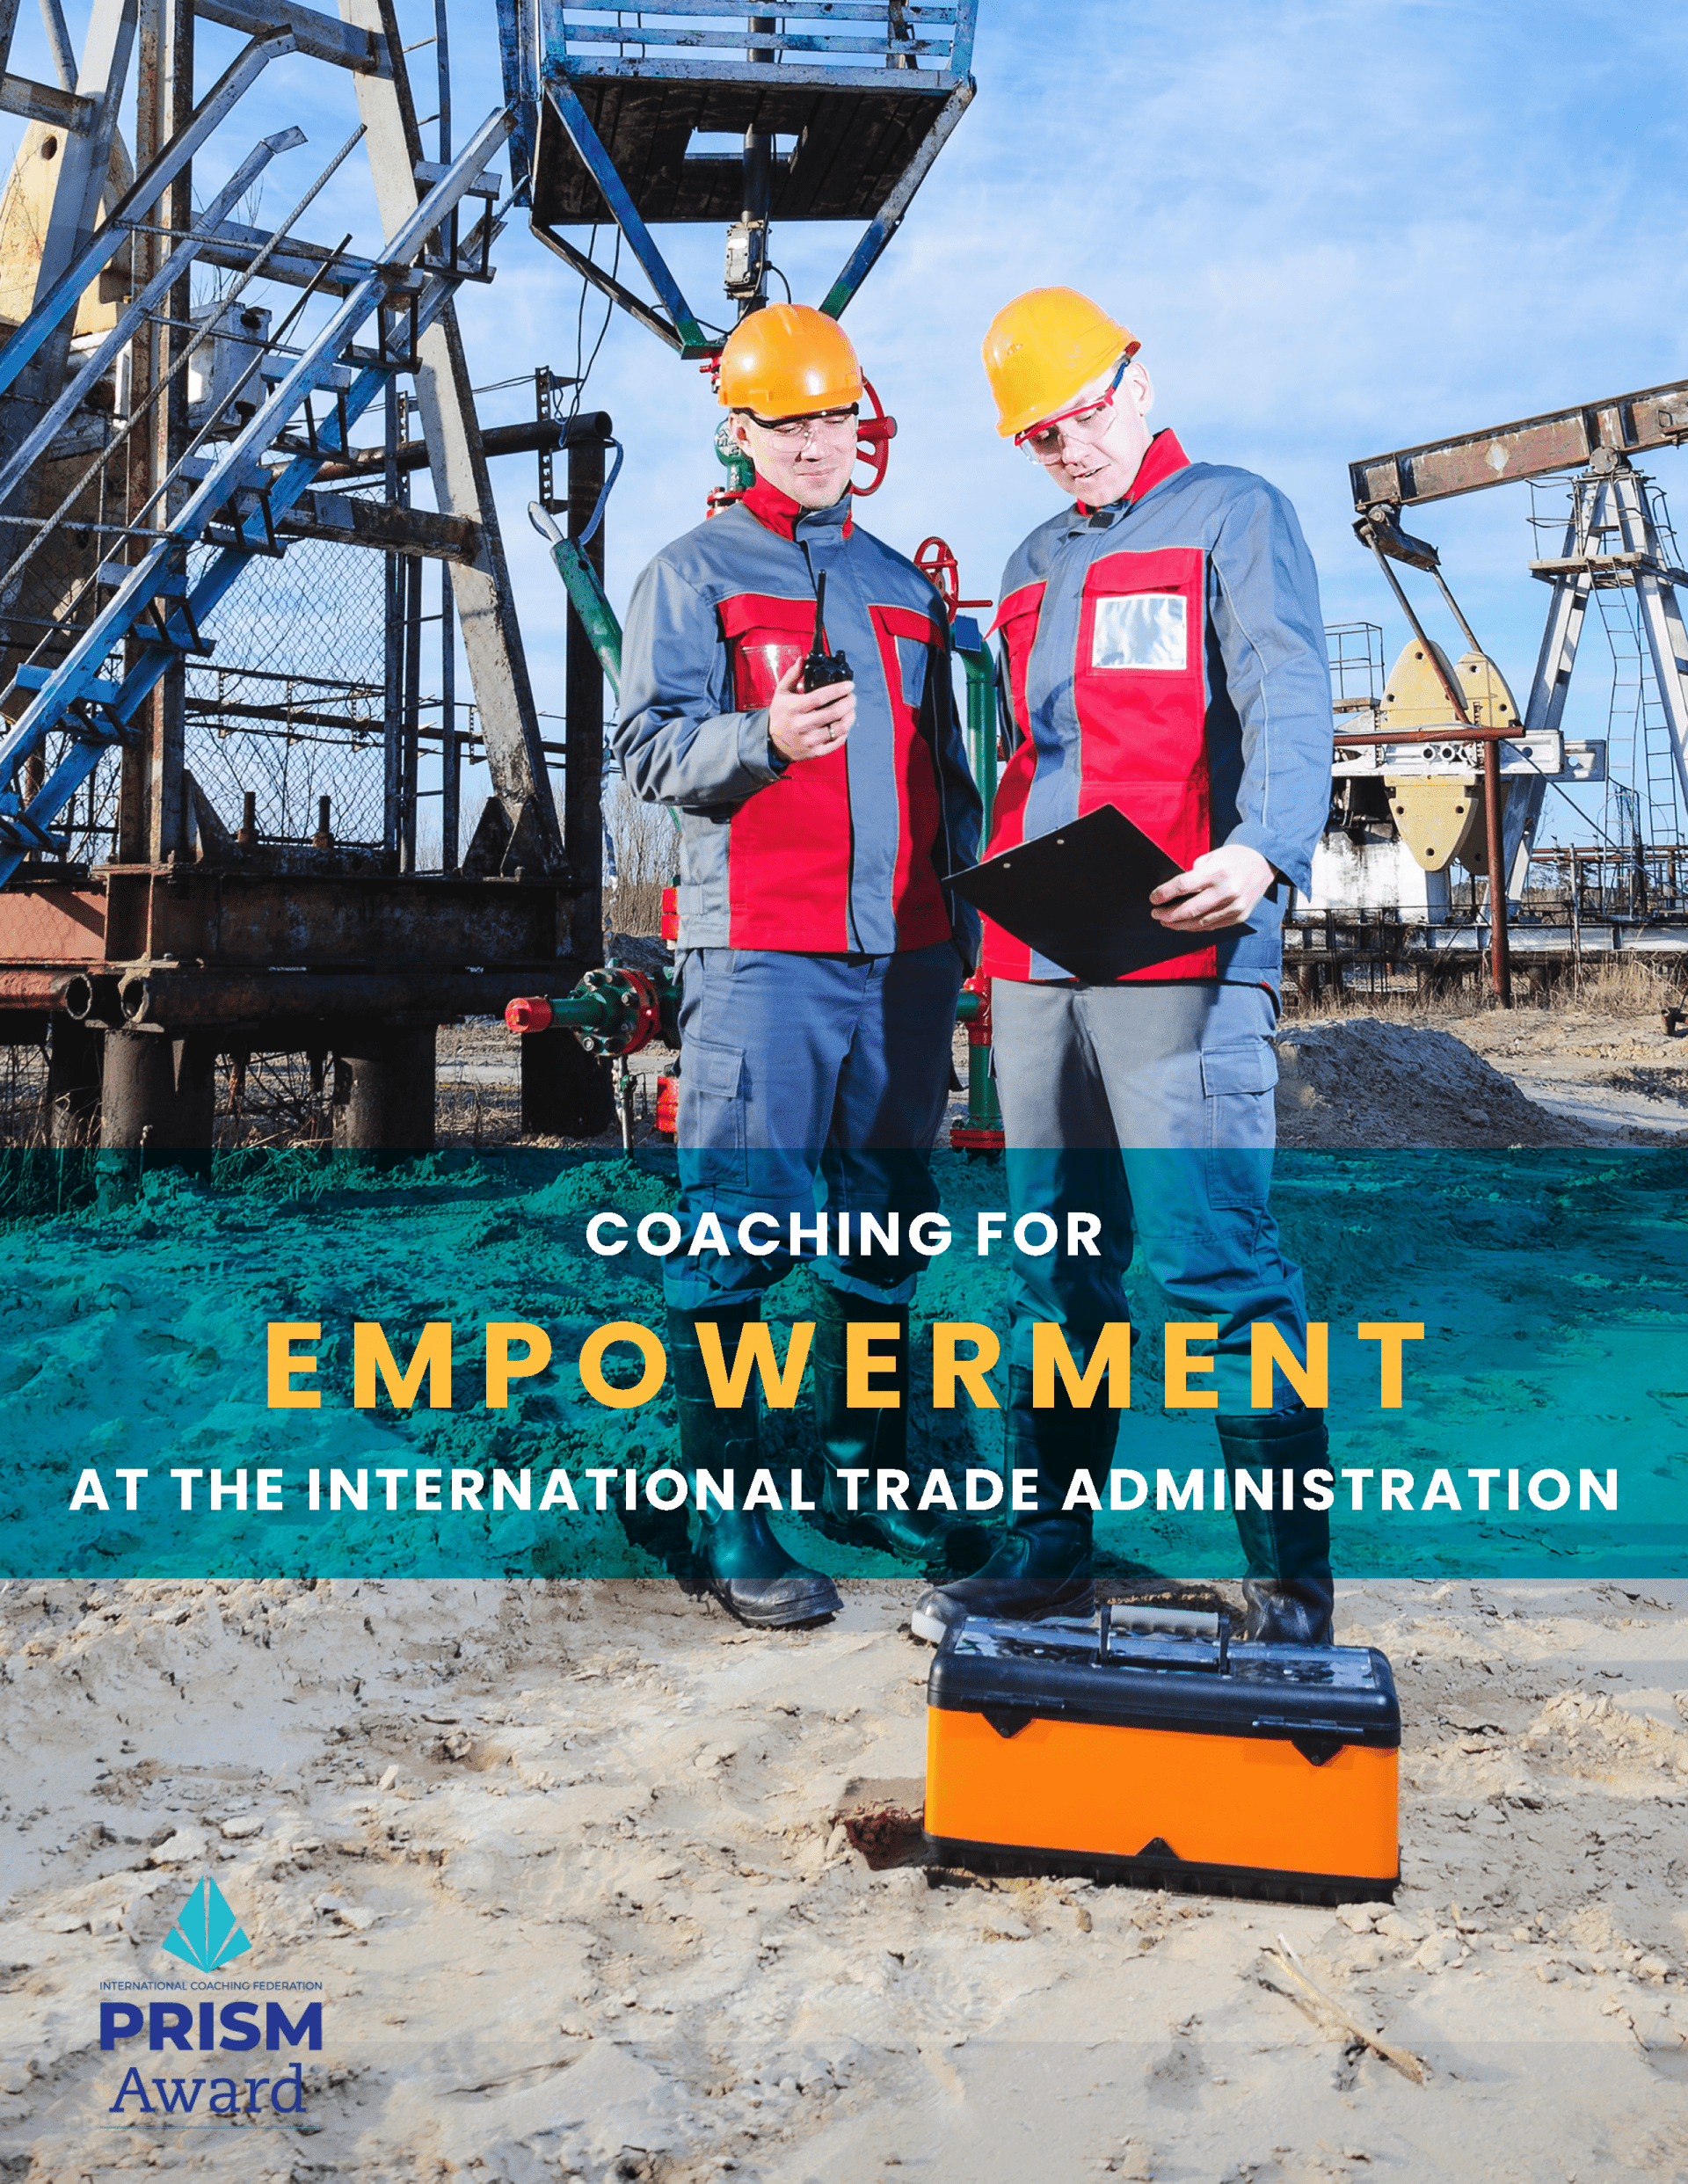 International Trade Administration Utilizes Coaching for Empowerment